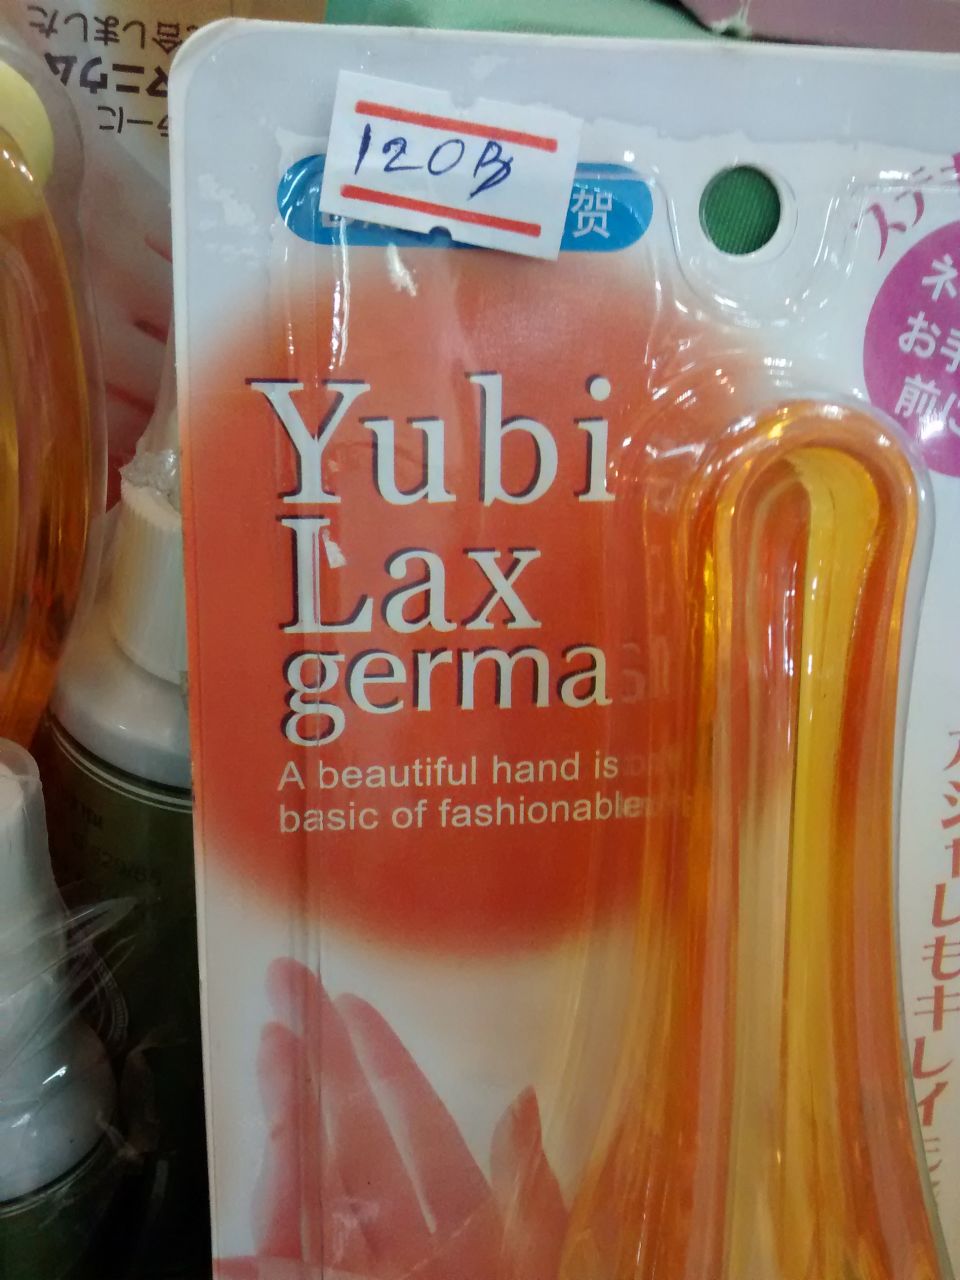 Yubi Lax Germa. A beautiful hand is basic of fashionable